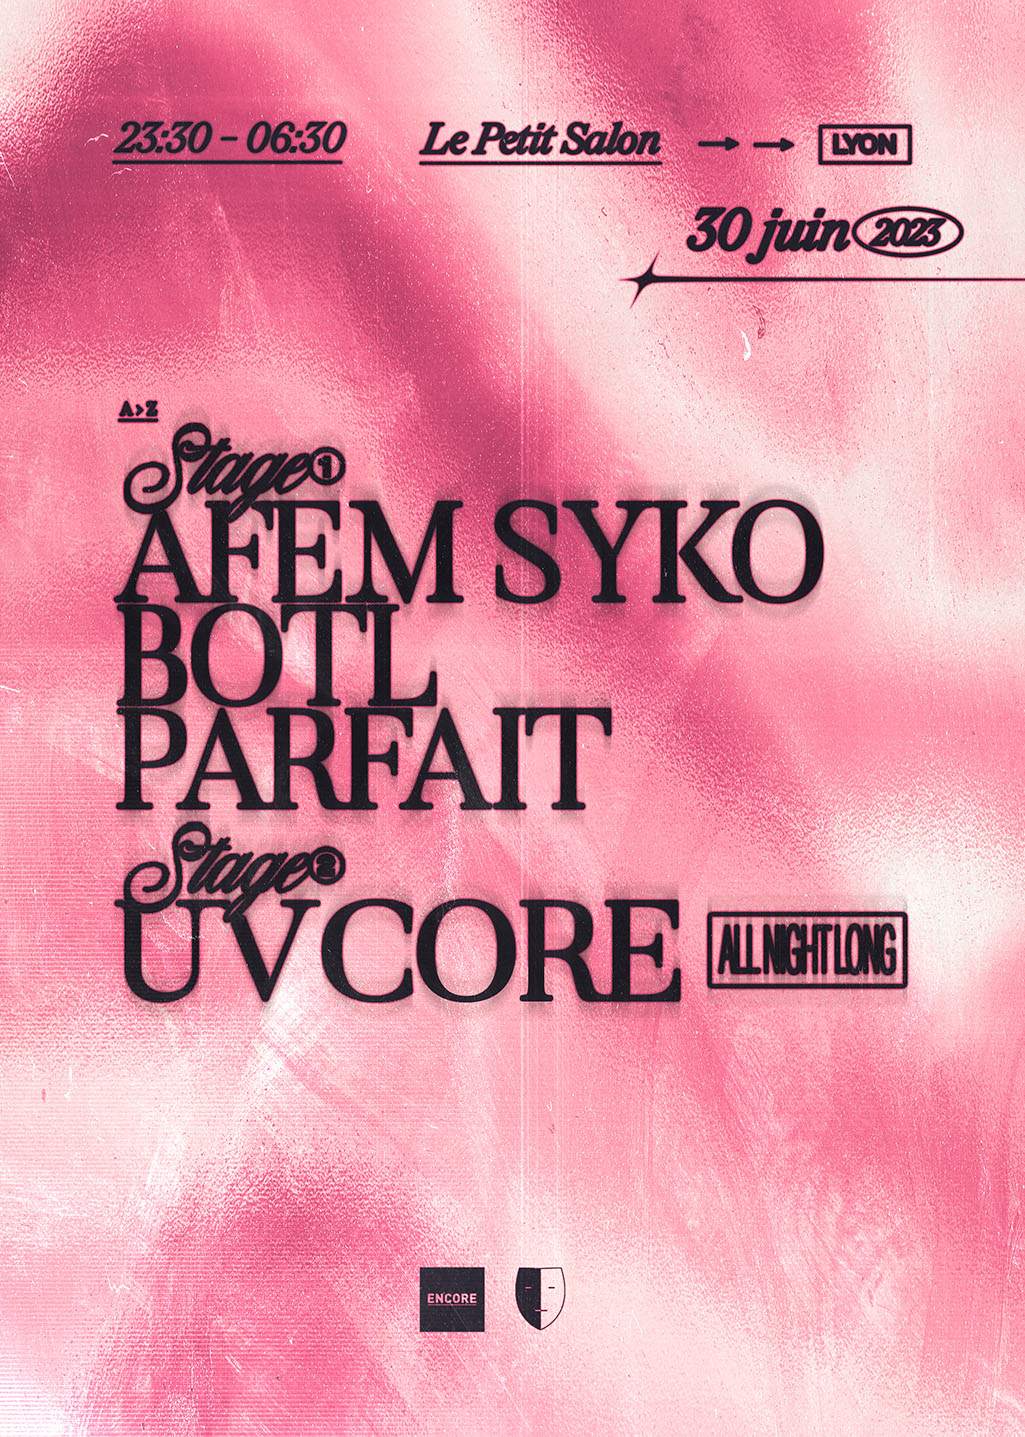 ENCORE: Parfait, Afem Syko, Botl & UVCORE all night long - Página frontal